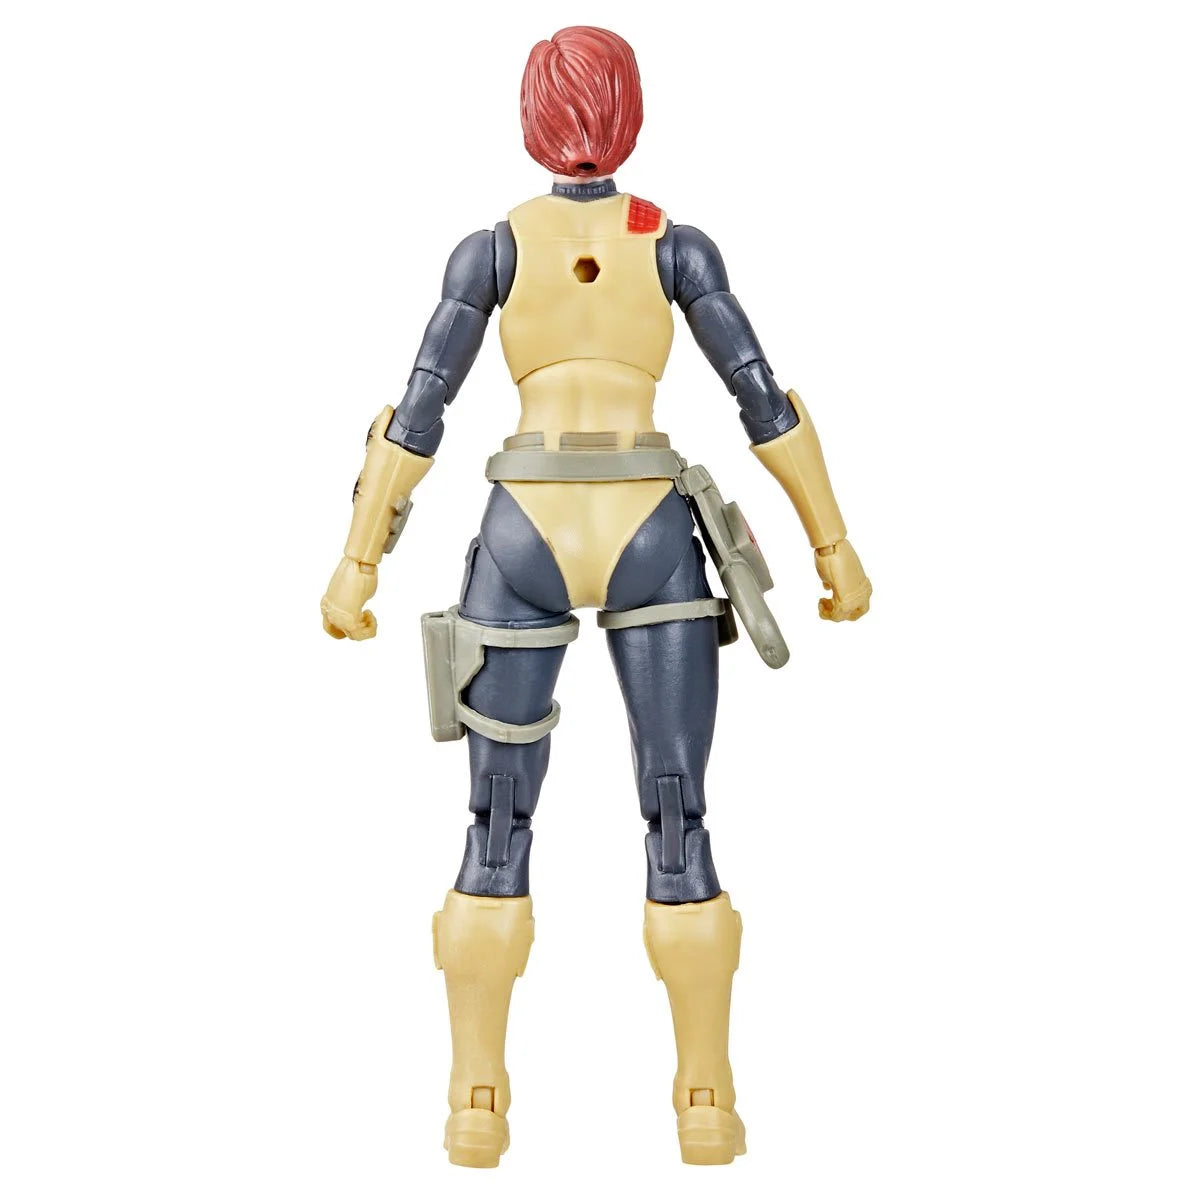 G.I. Joe Classified Series Retro Cardback, Scarlett Action Figure Toy